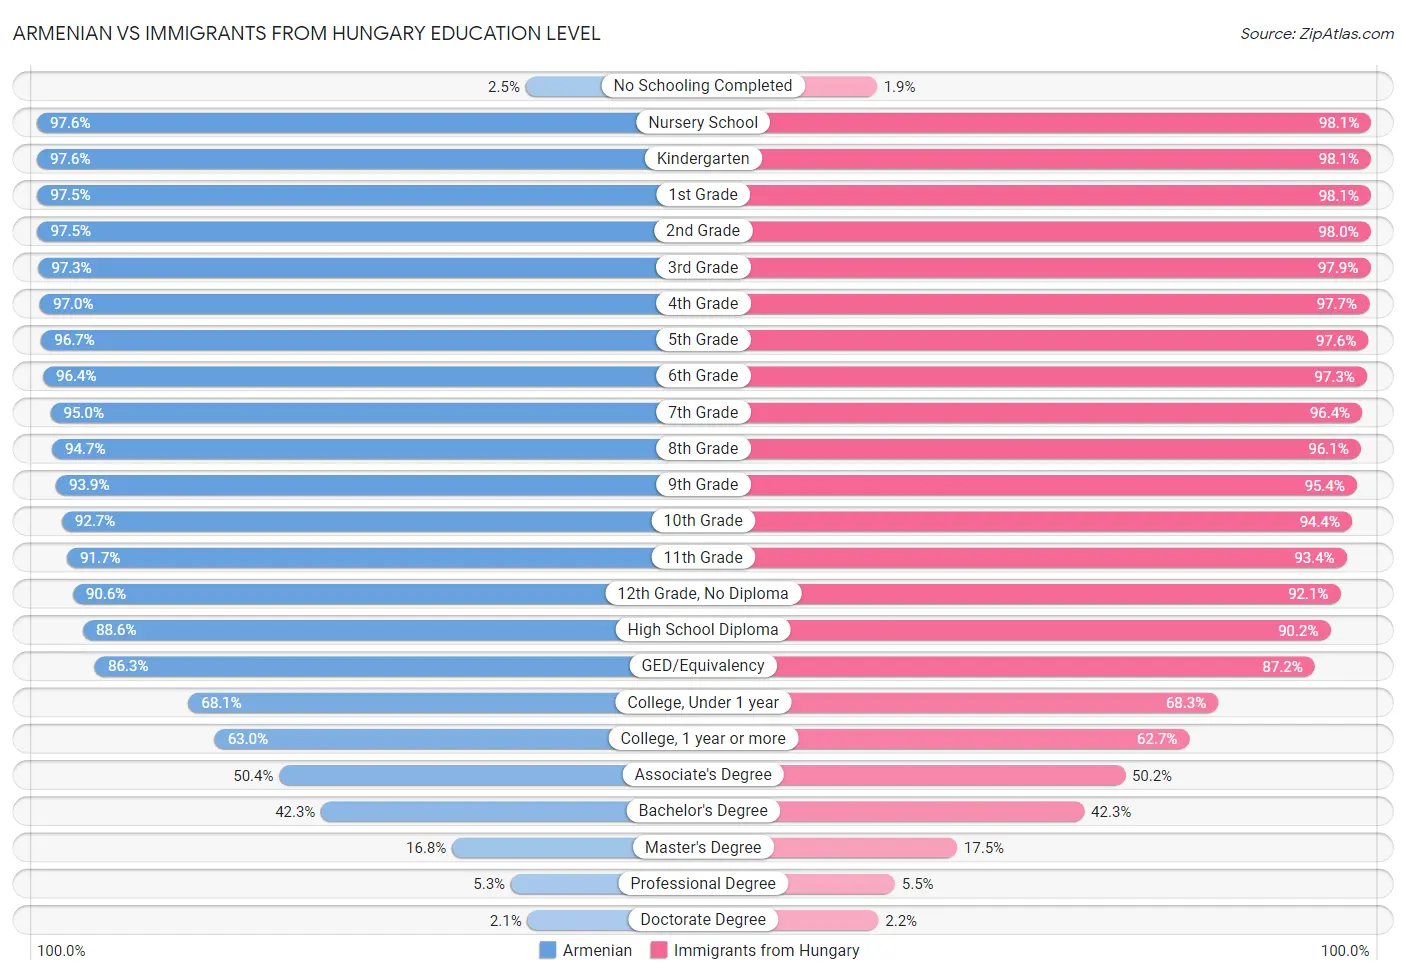 Armenian vs Immigrants from Hungary Education Level